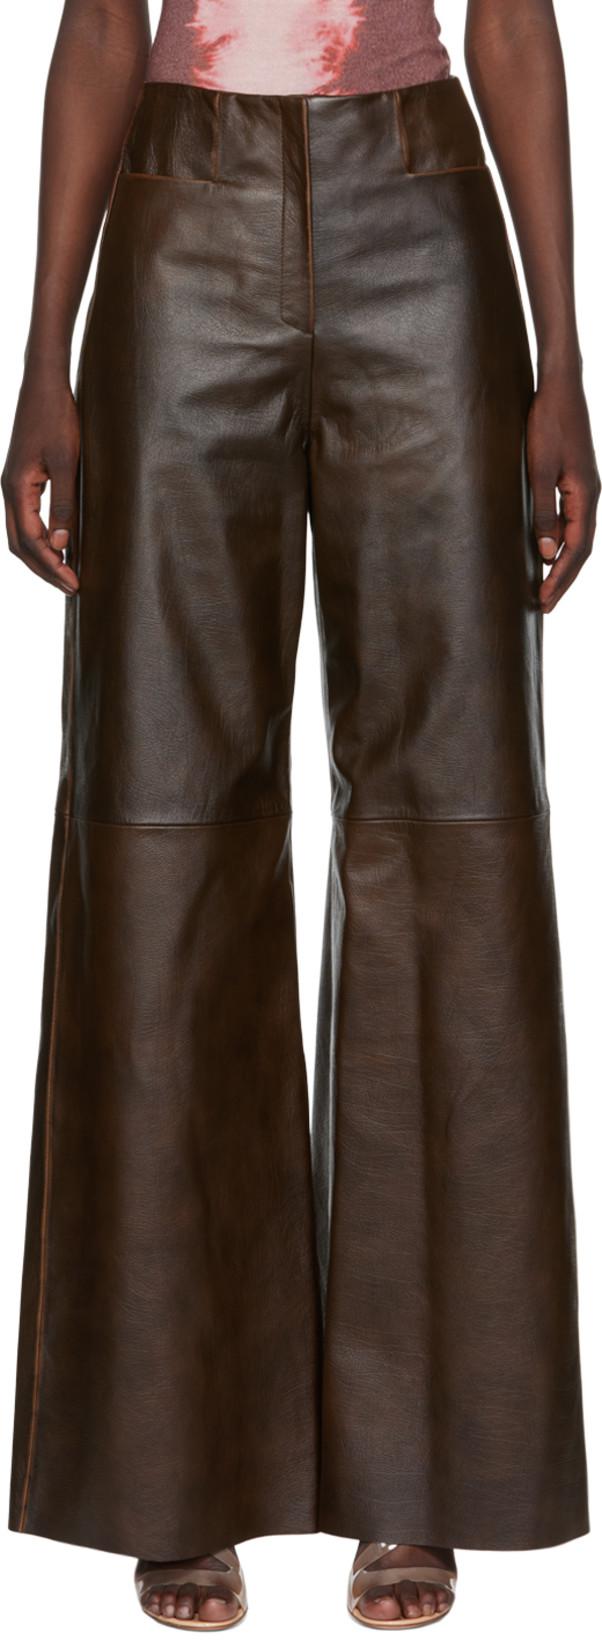 Brown Hagen Leather Pants by 16 ARLINGTON